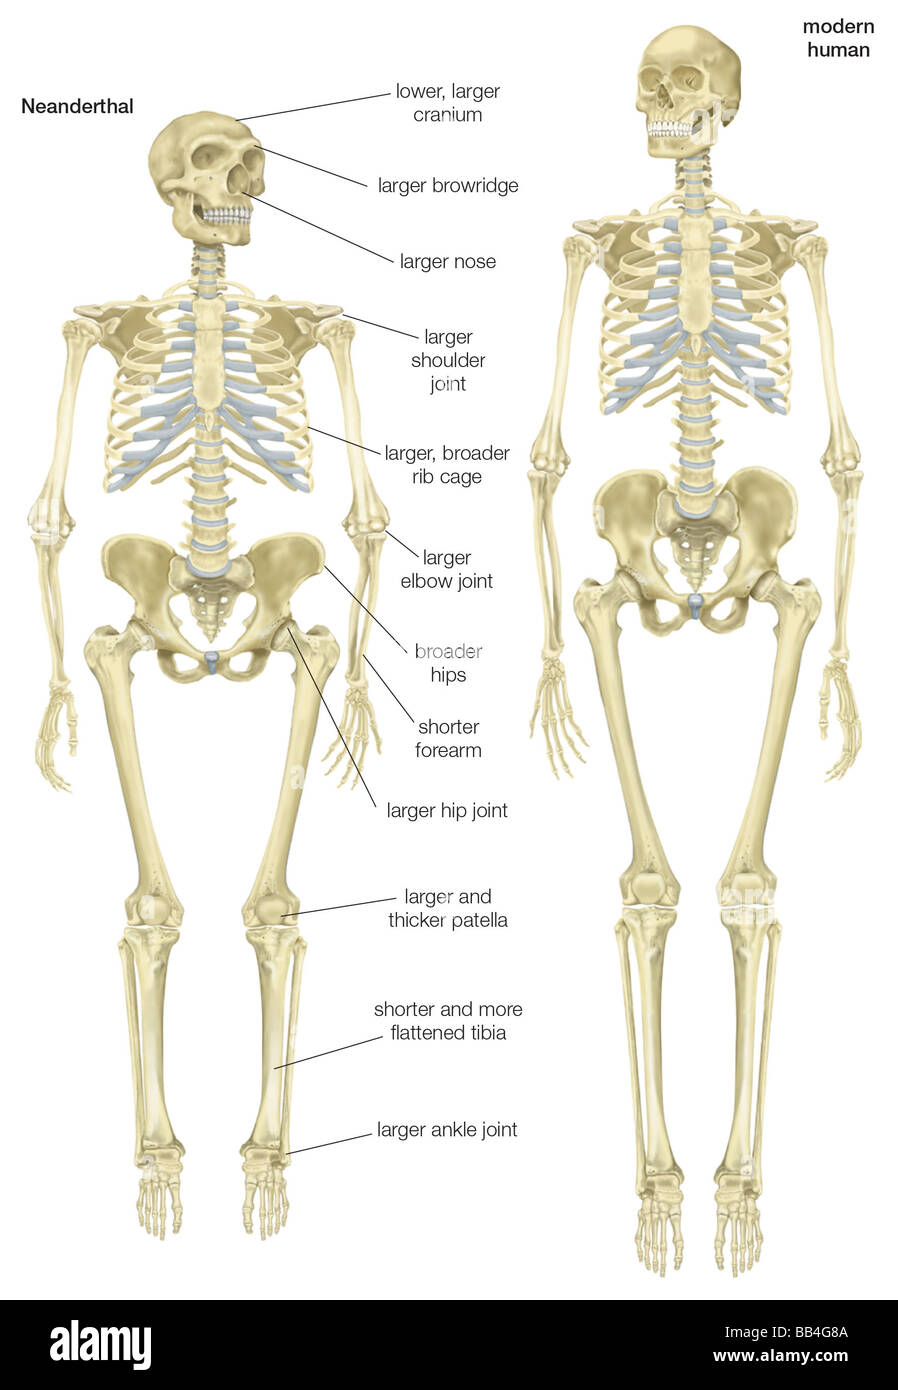 Esqueleto de Neandertal (Homo neanderthalensis) comparado con un esqueleto de un humano moderno (Homo sapiens). Foto de stock